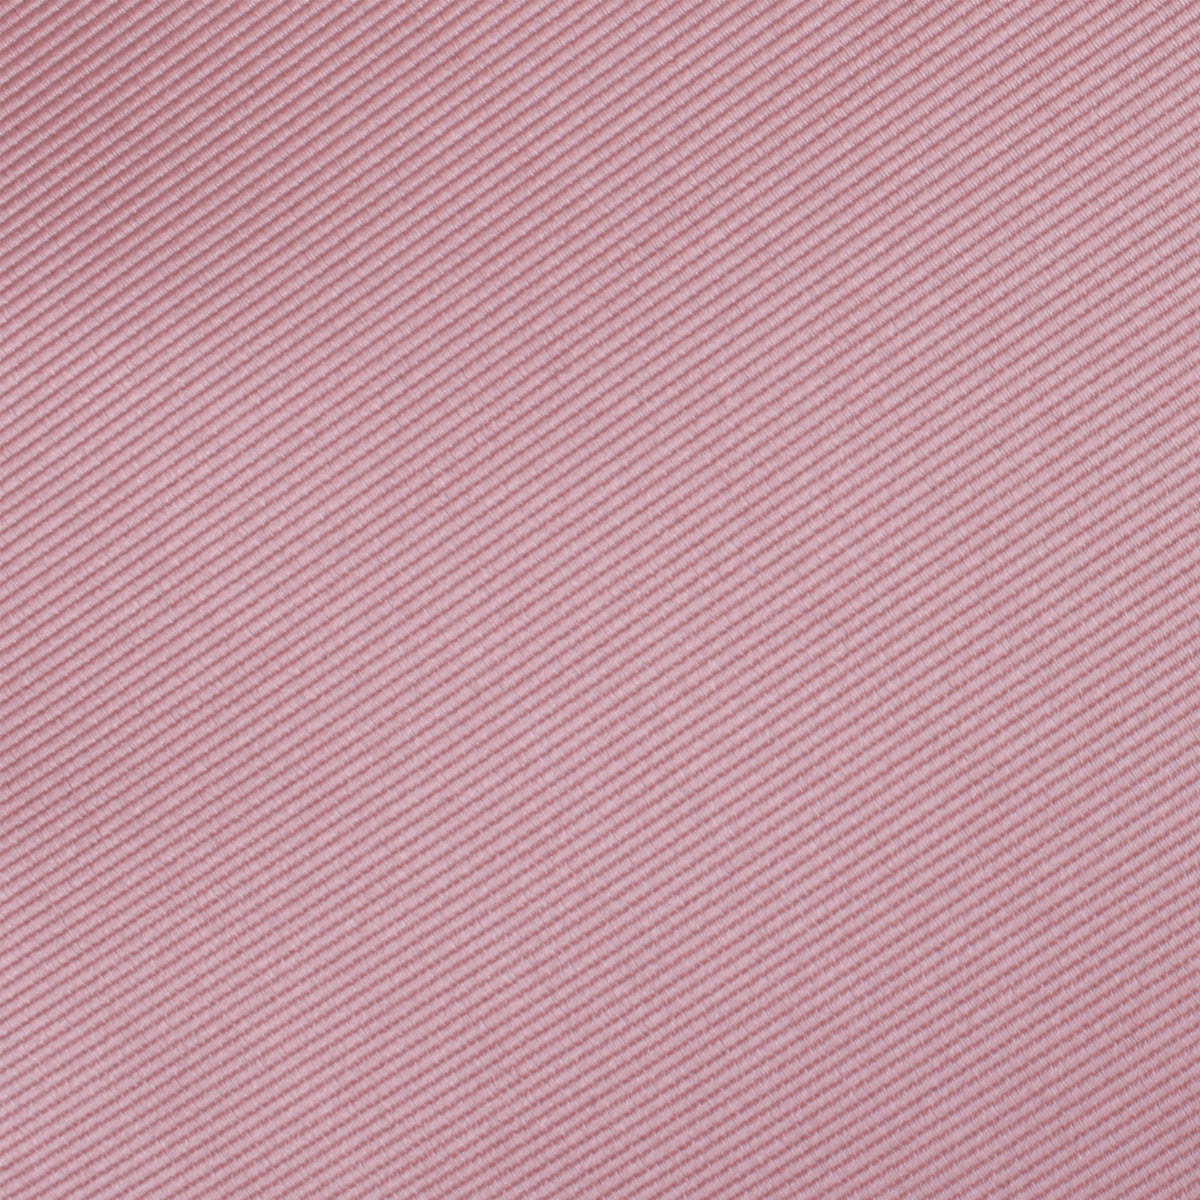 Dusty Rose Twill Fabric Swatch